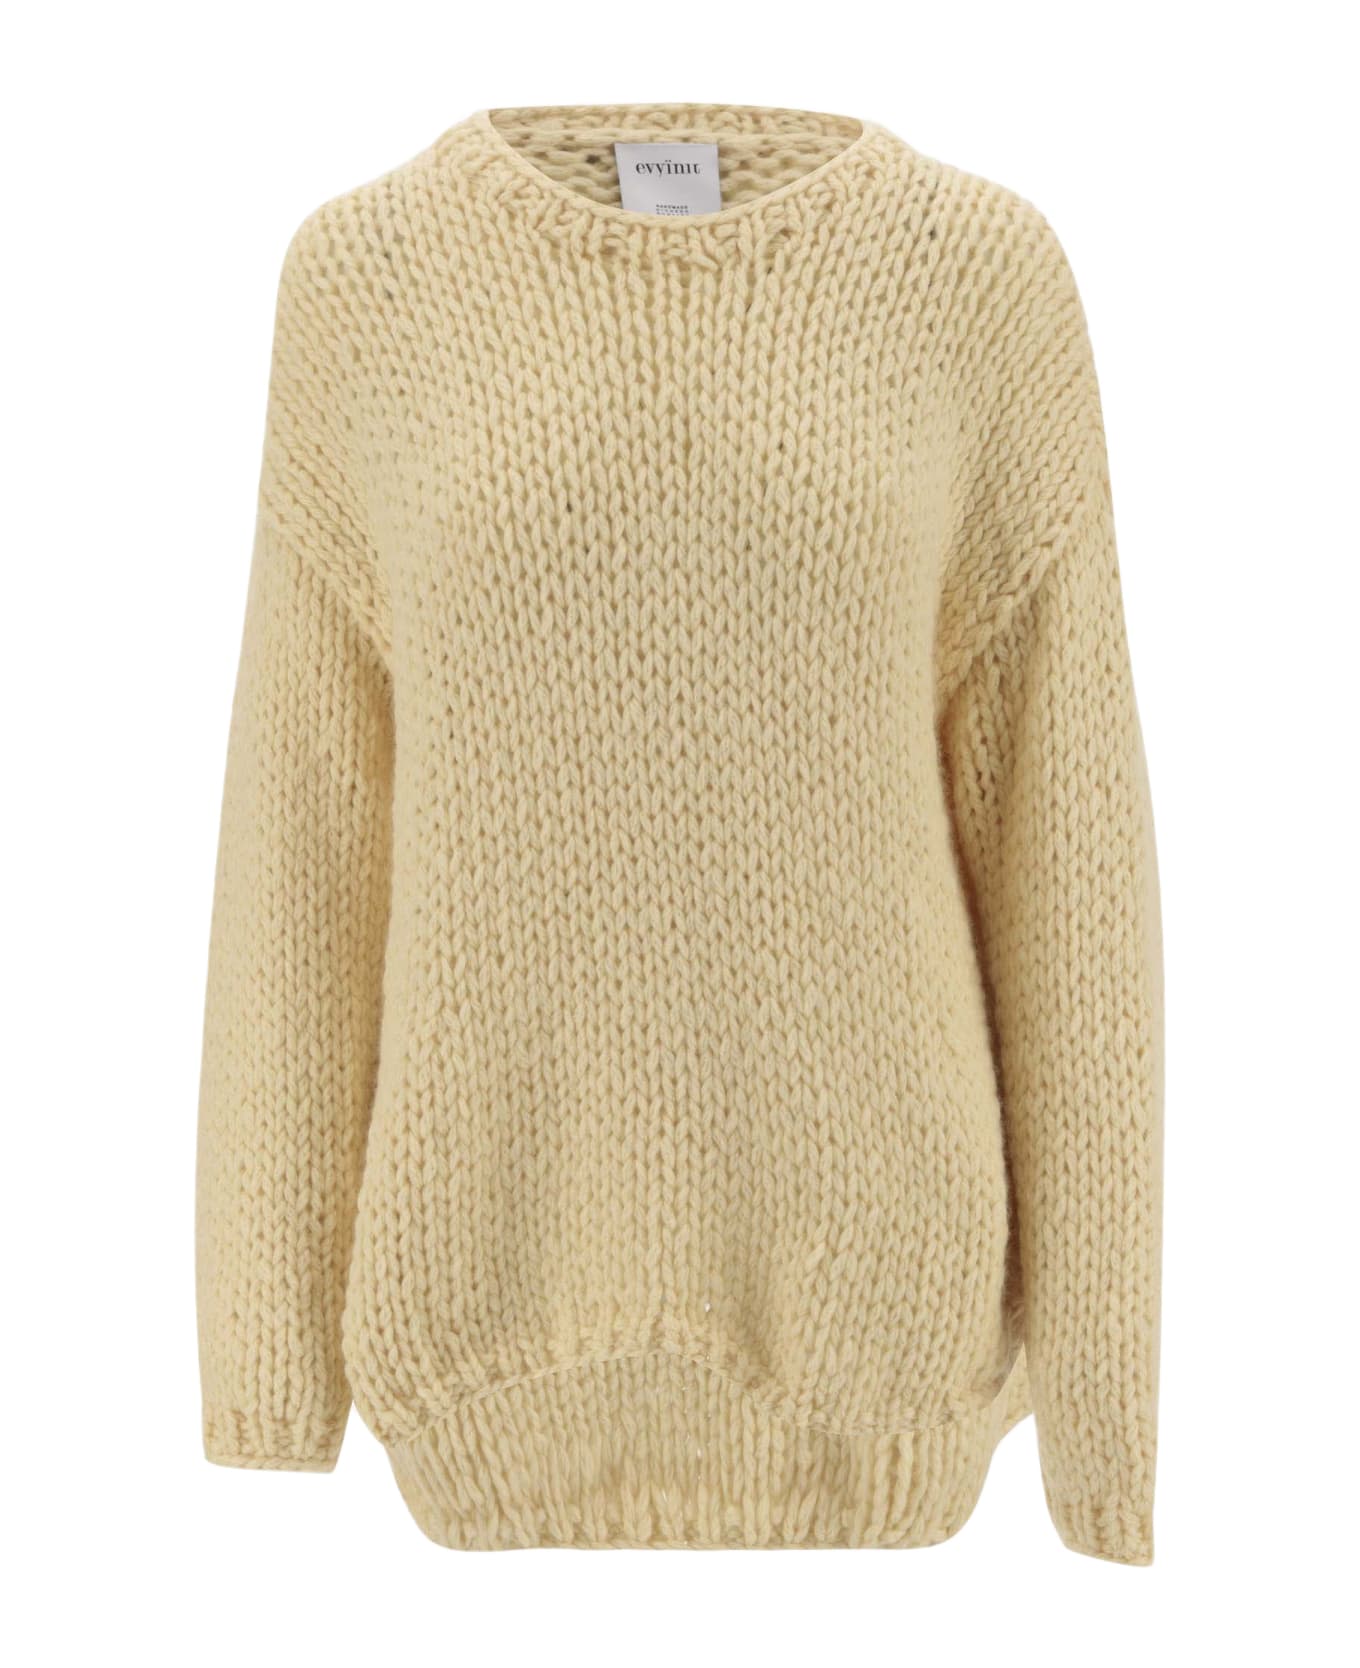 Evyinit Merino Wool Blend Sweater - Yellow